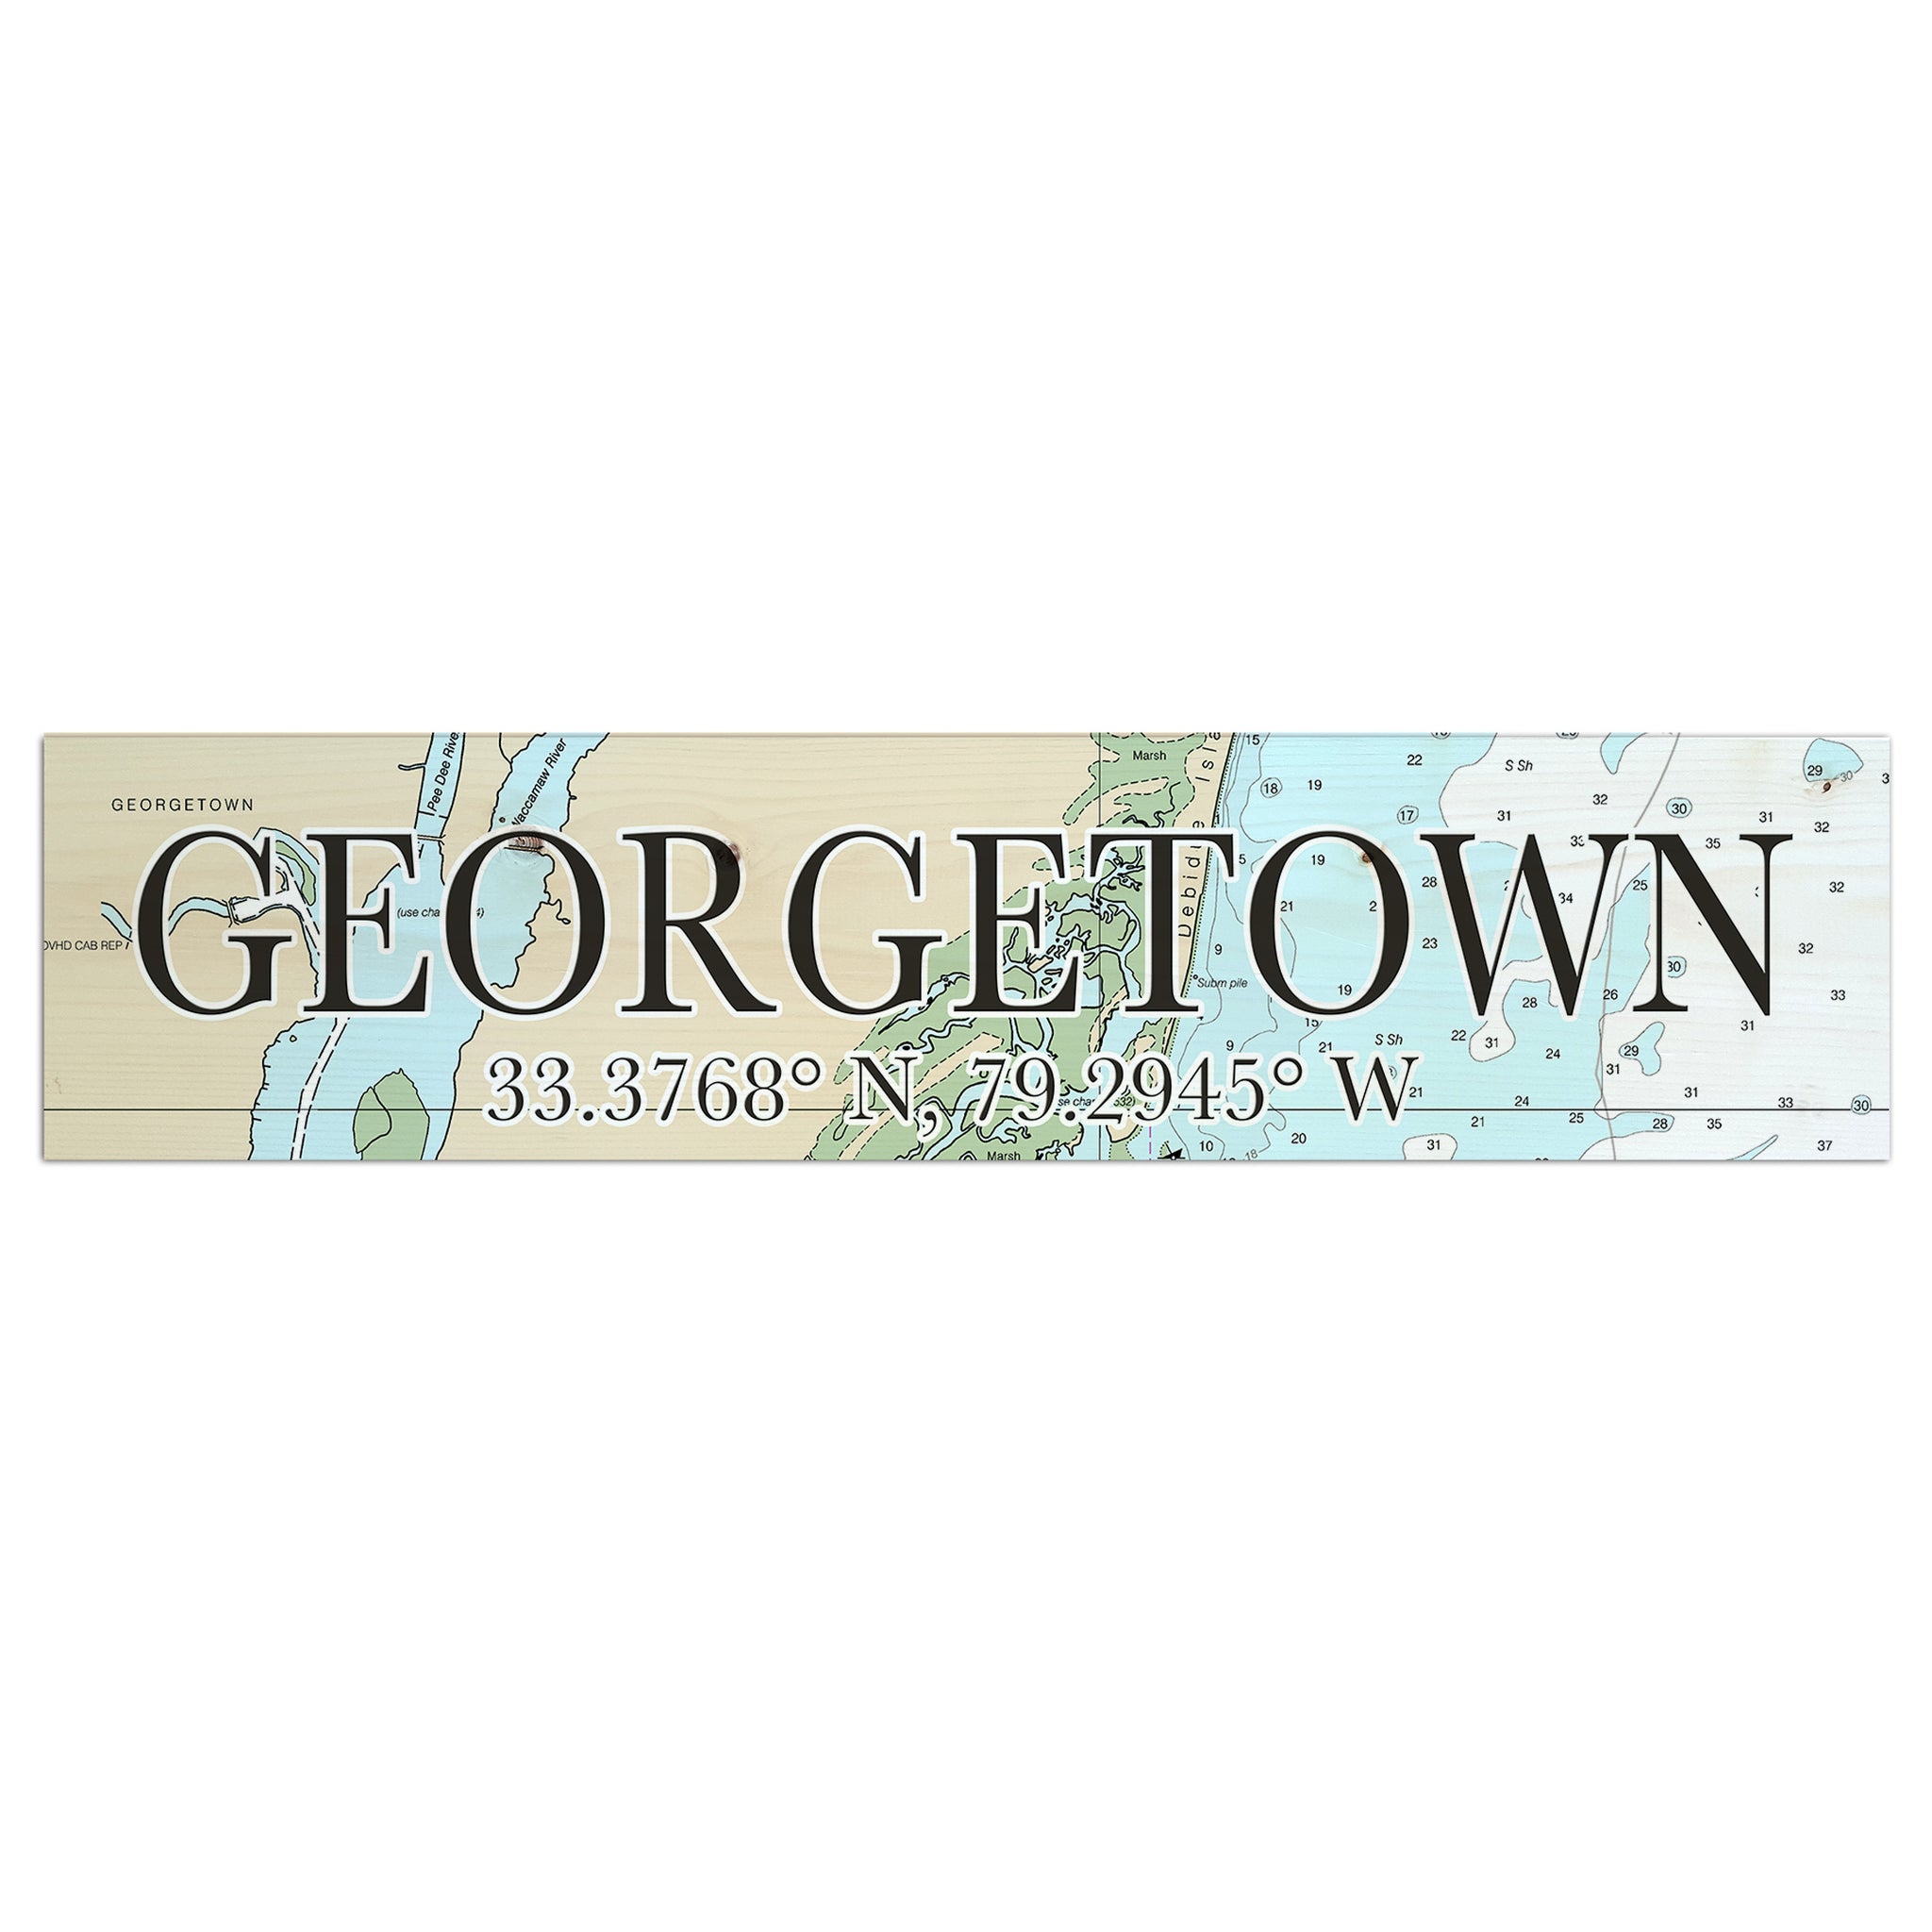 Georgetown,  SC Coordinate Sign